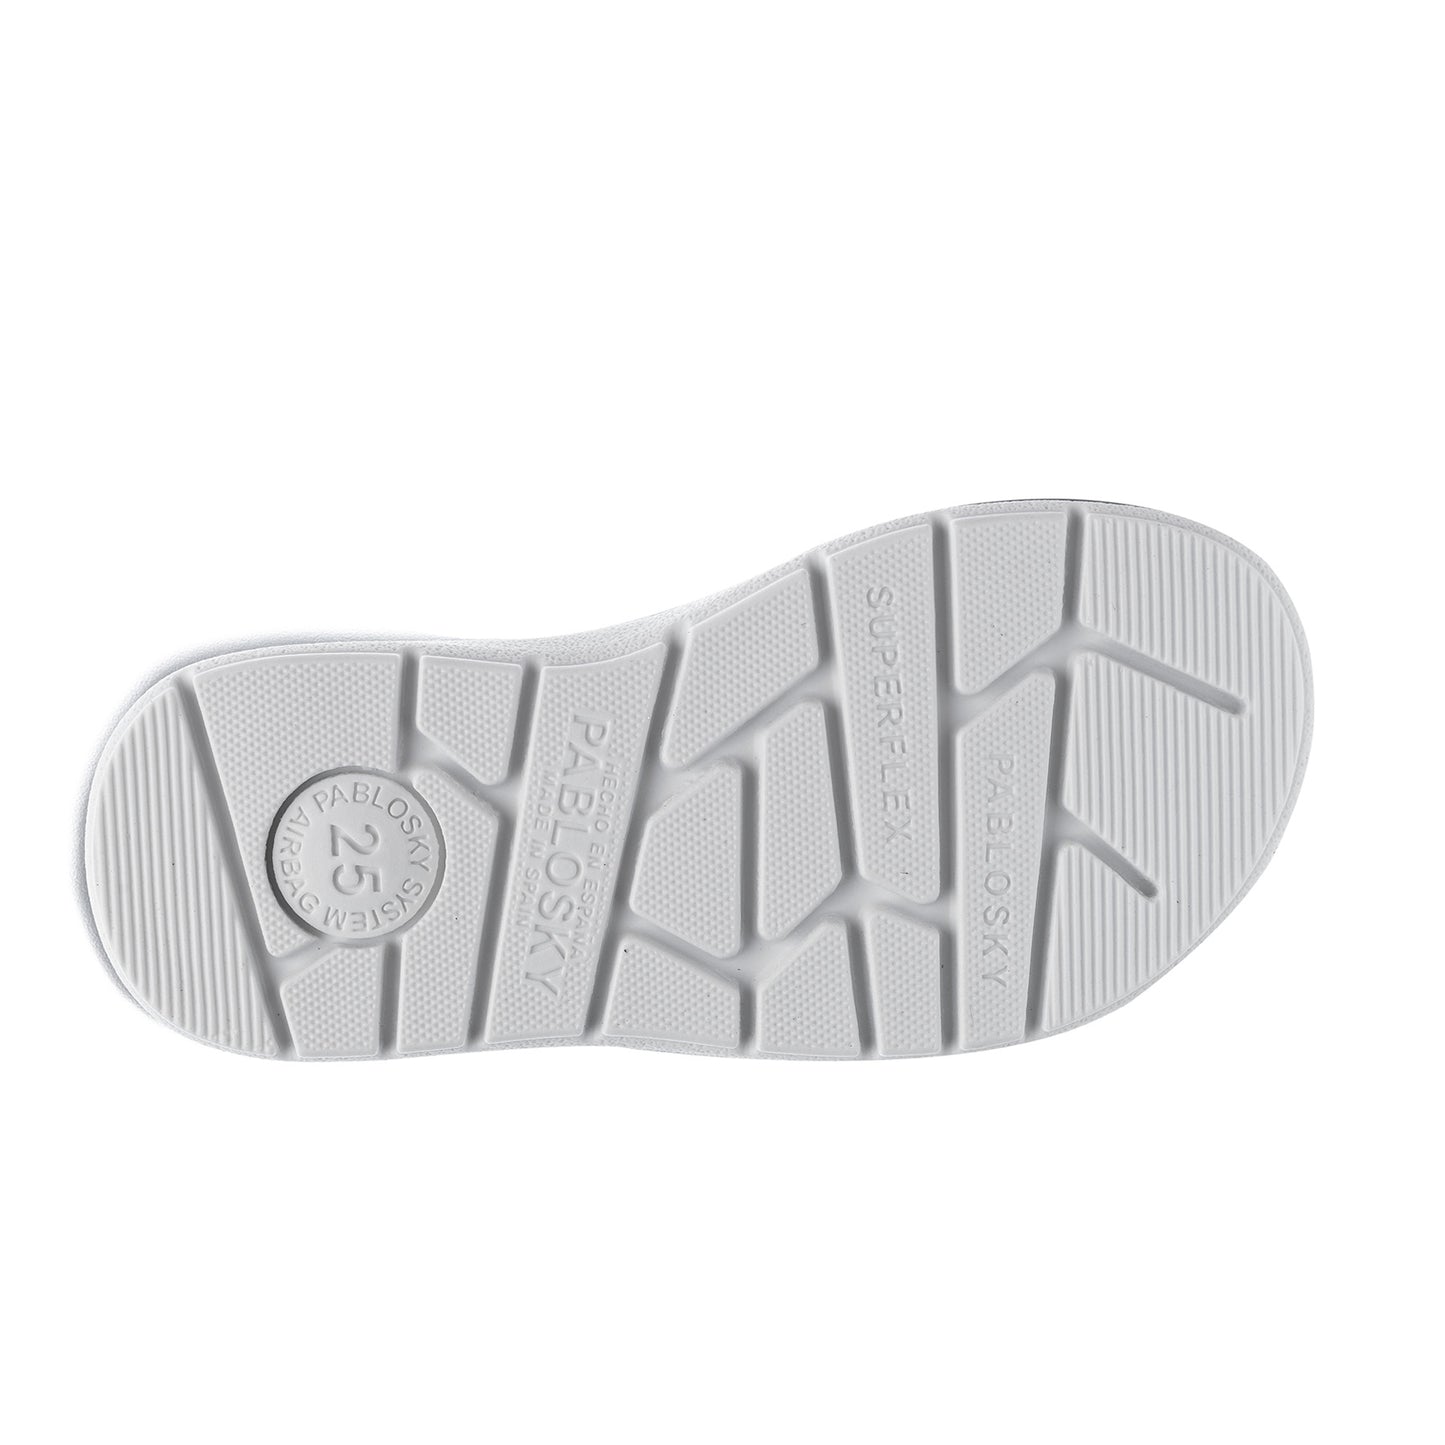 Pablosky Sandals / 422600